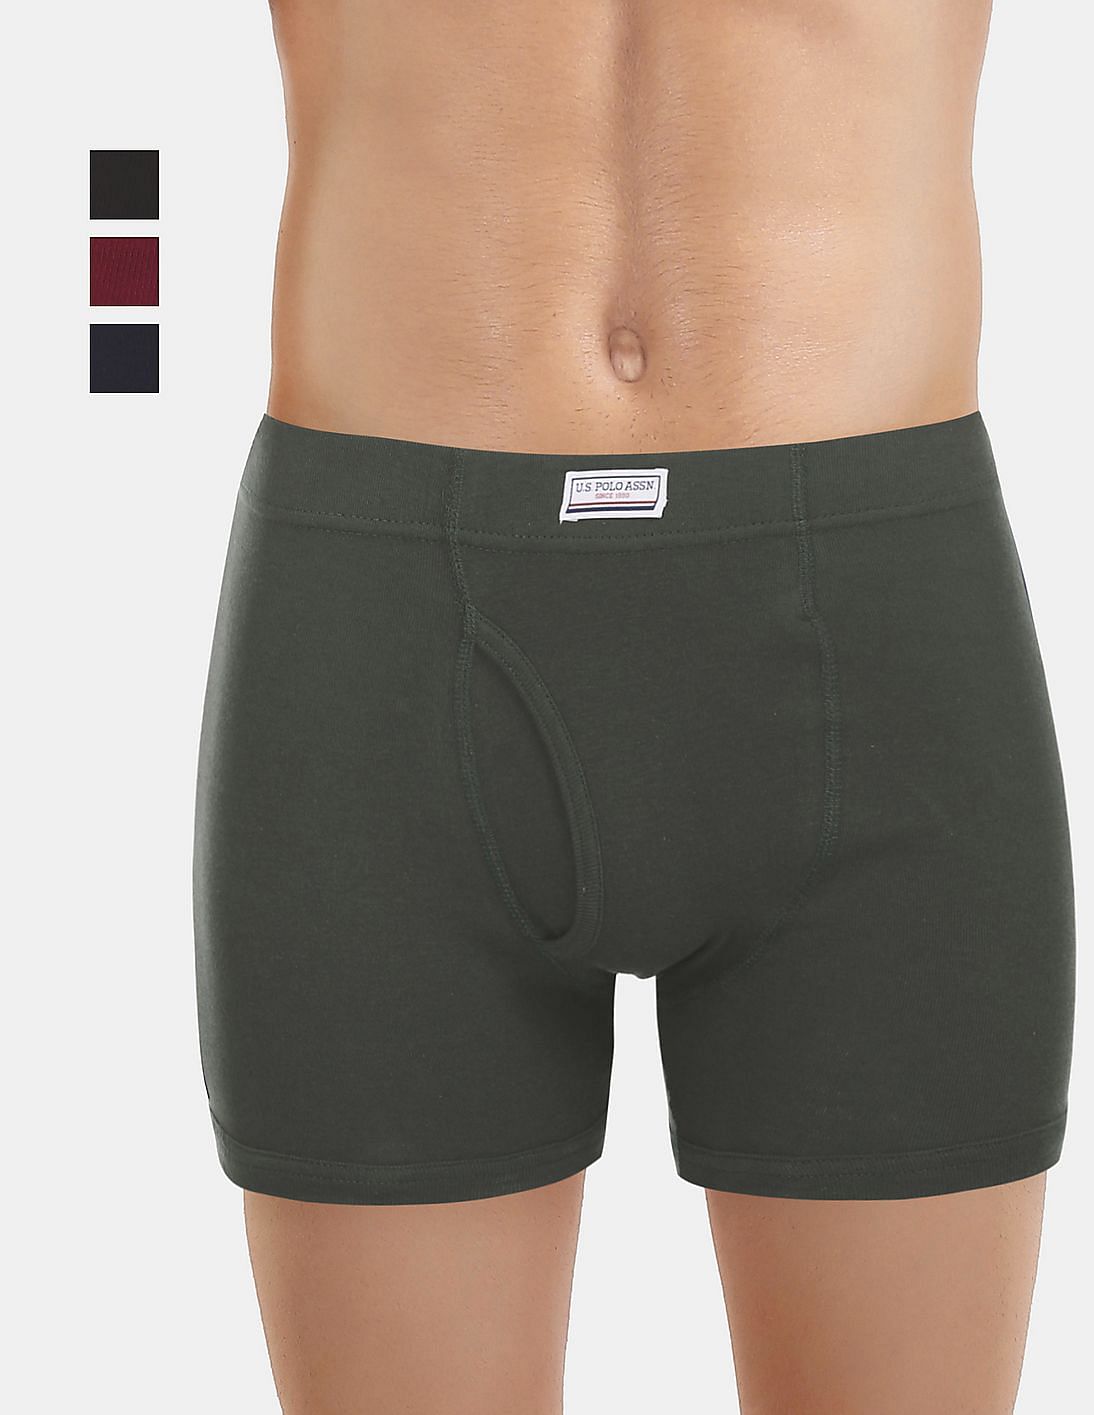 Buy USPA Innerwear Men Green Solid Cotton Trunks - NNNOW.com